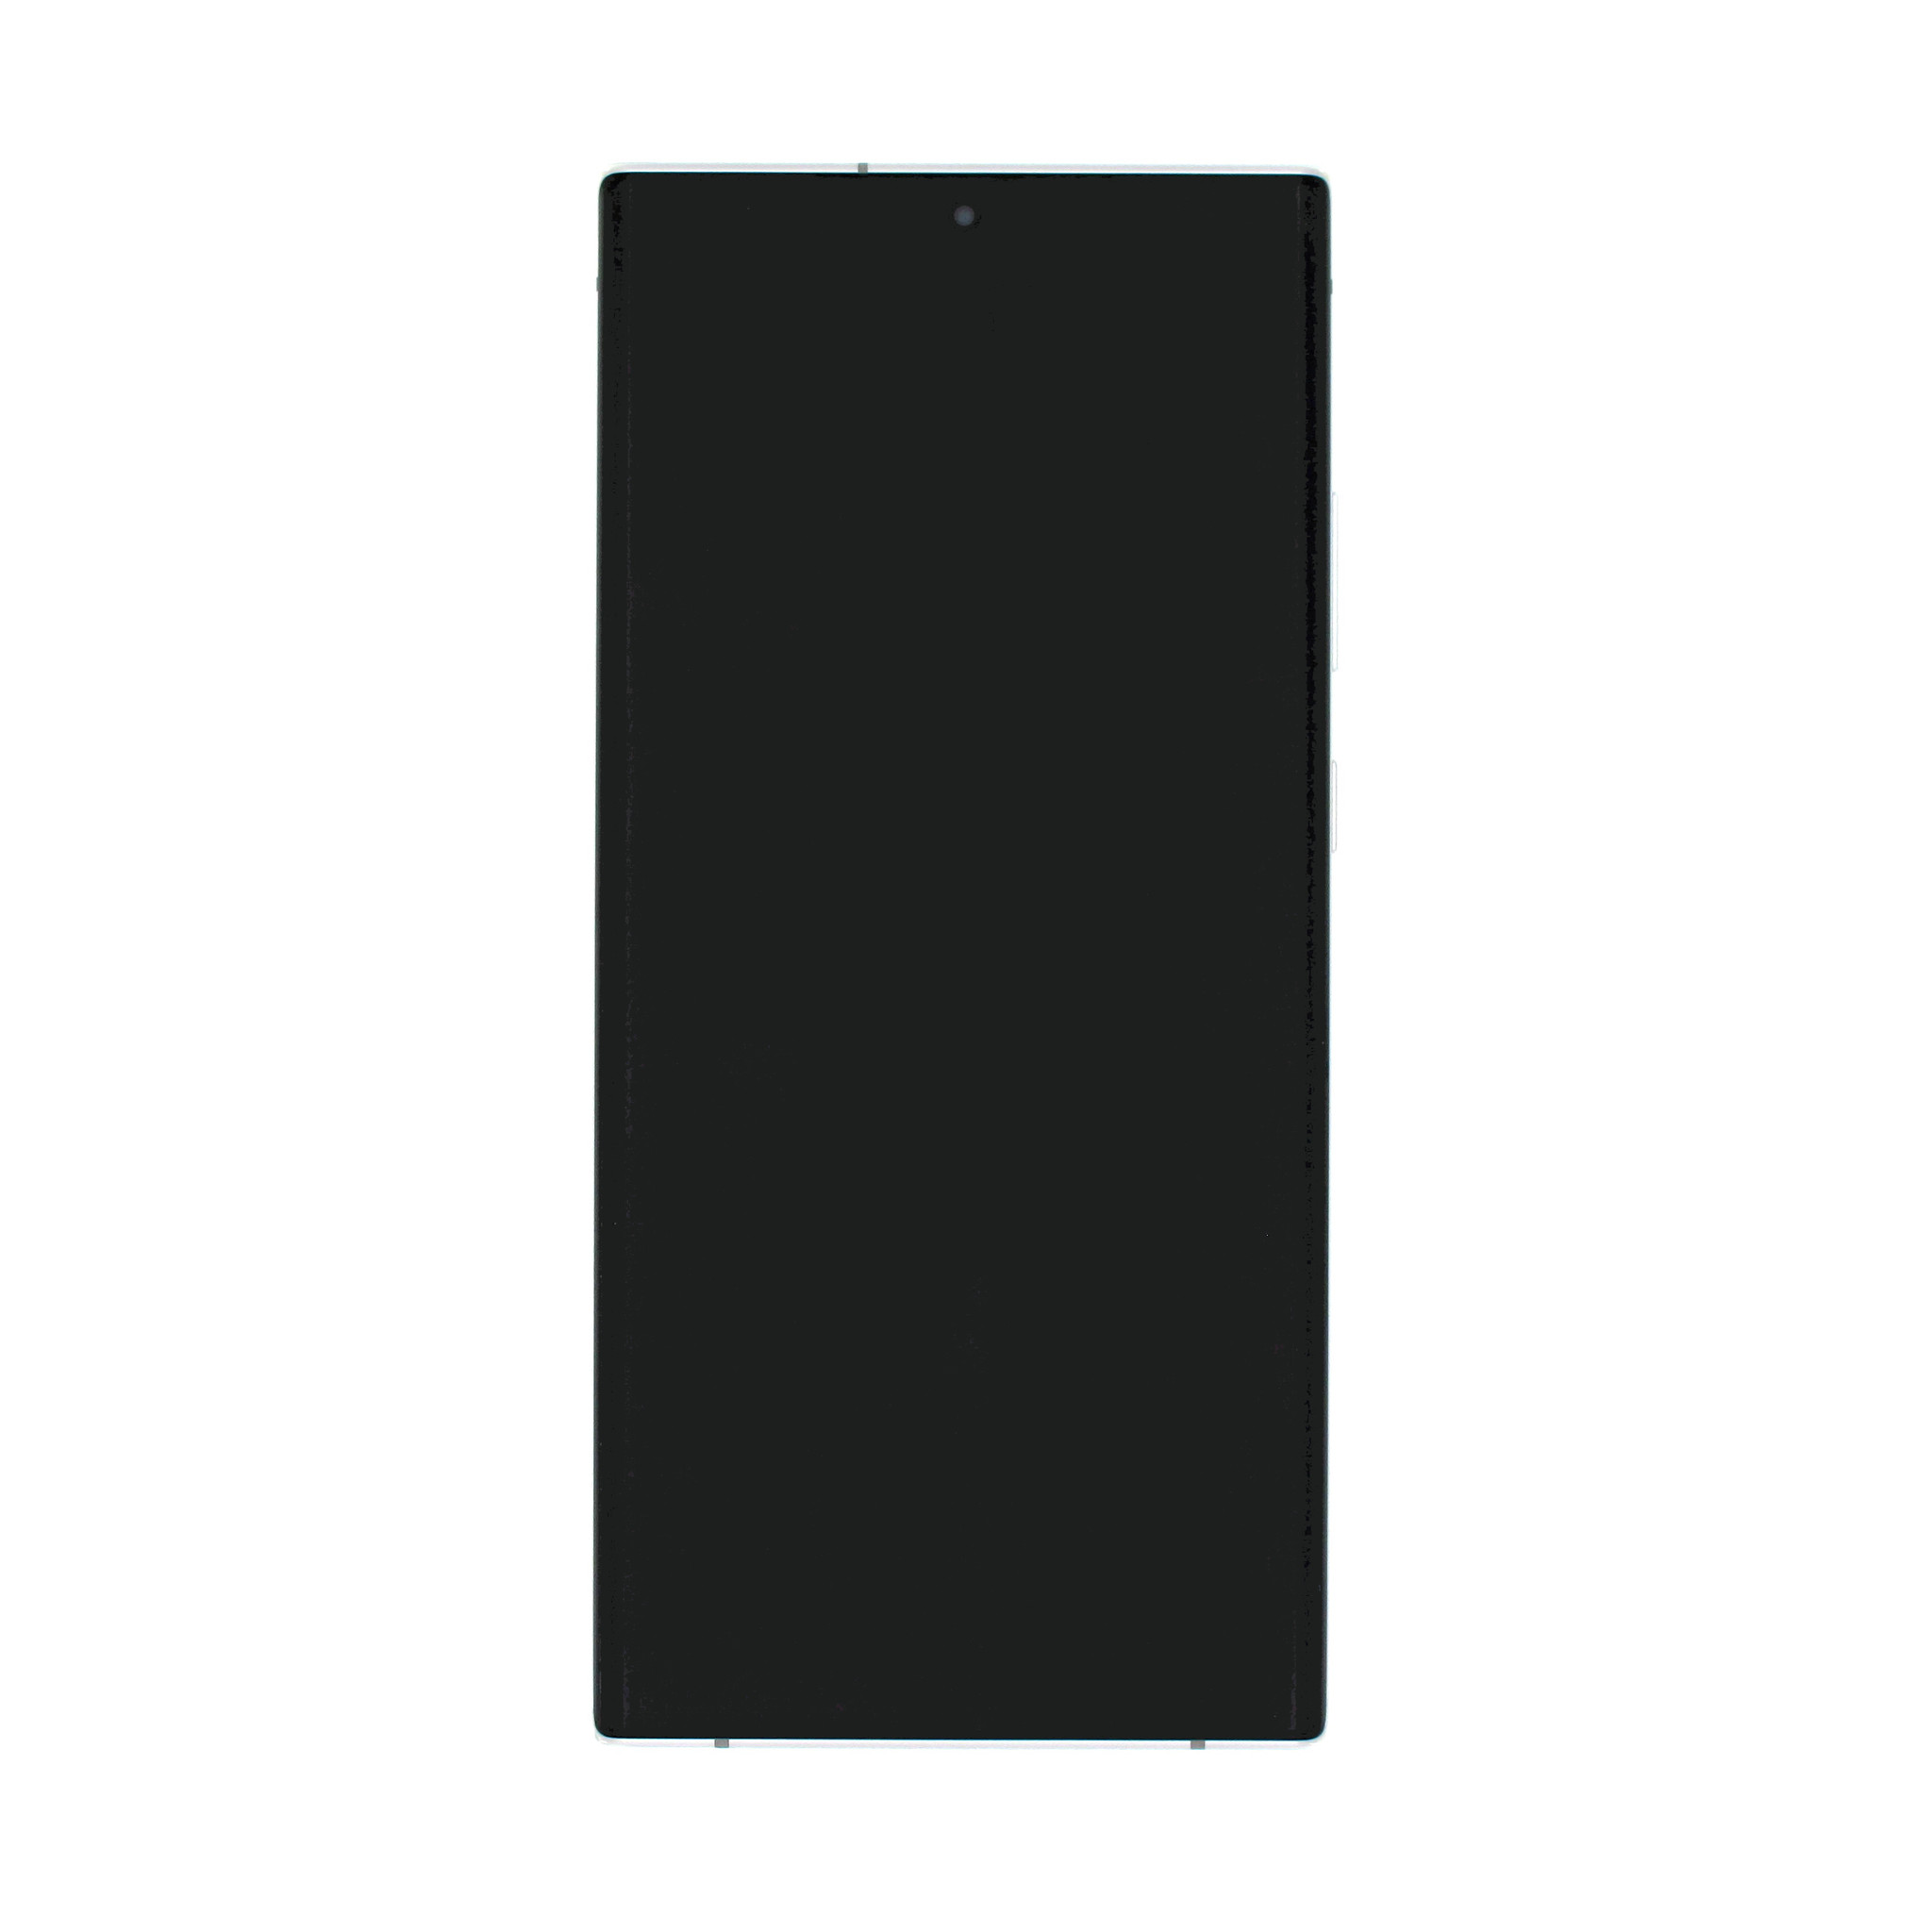 Samsung Galaxy Note20 Ultra 5G Mystic Black!